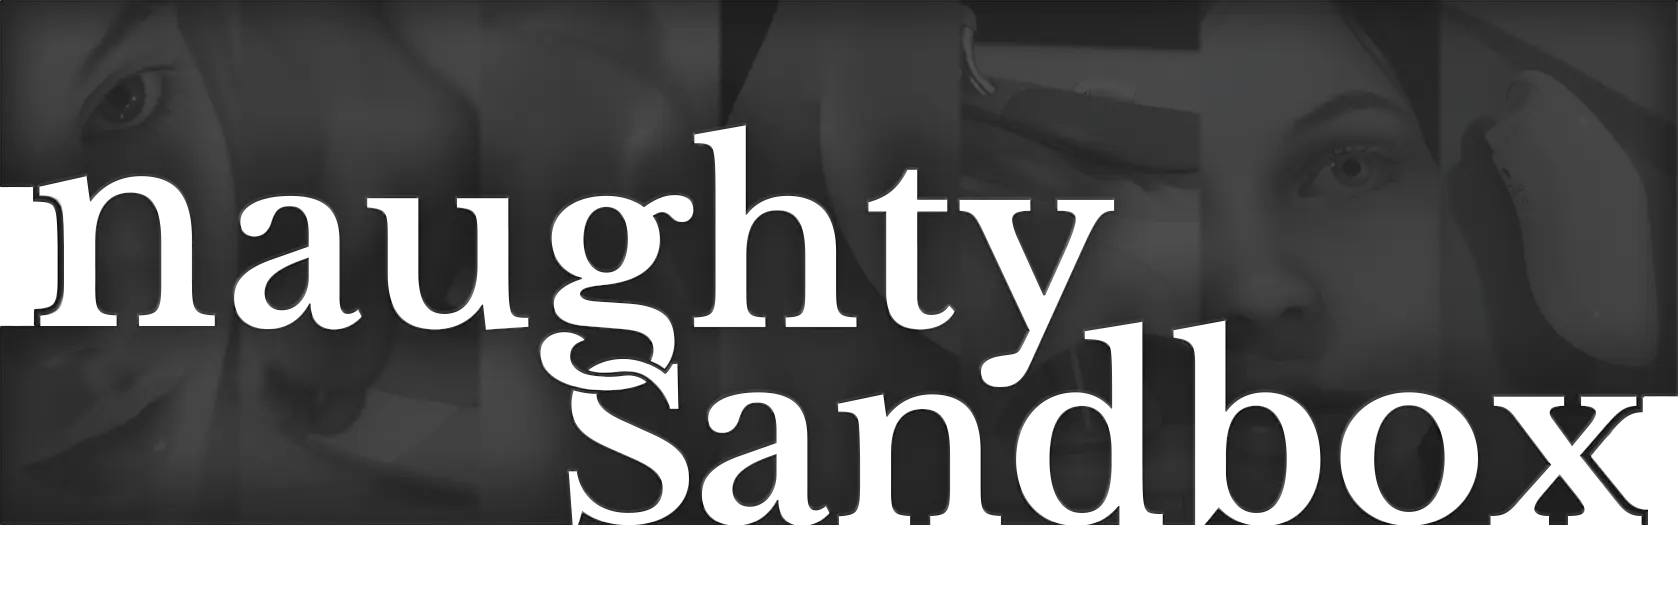 Naughty Sandbox main image